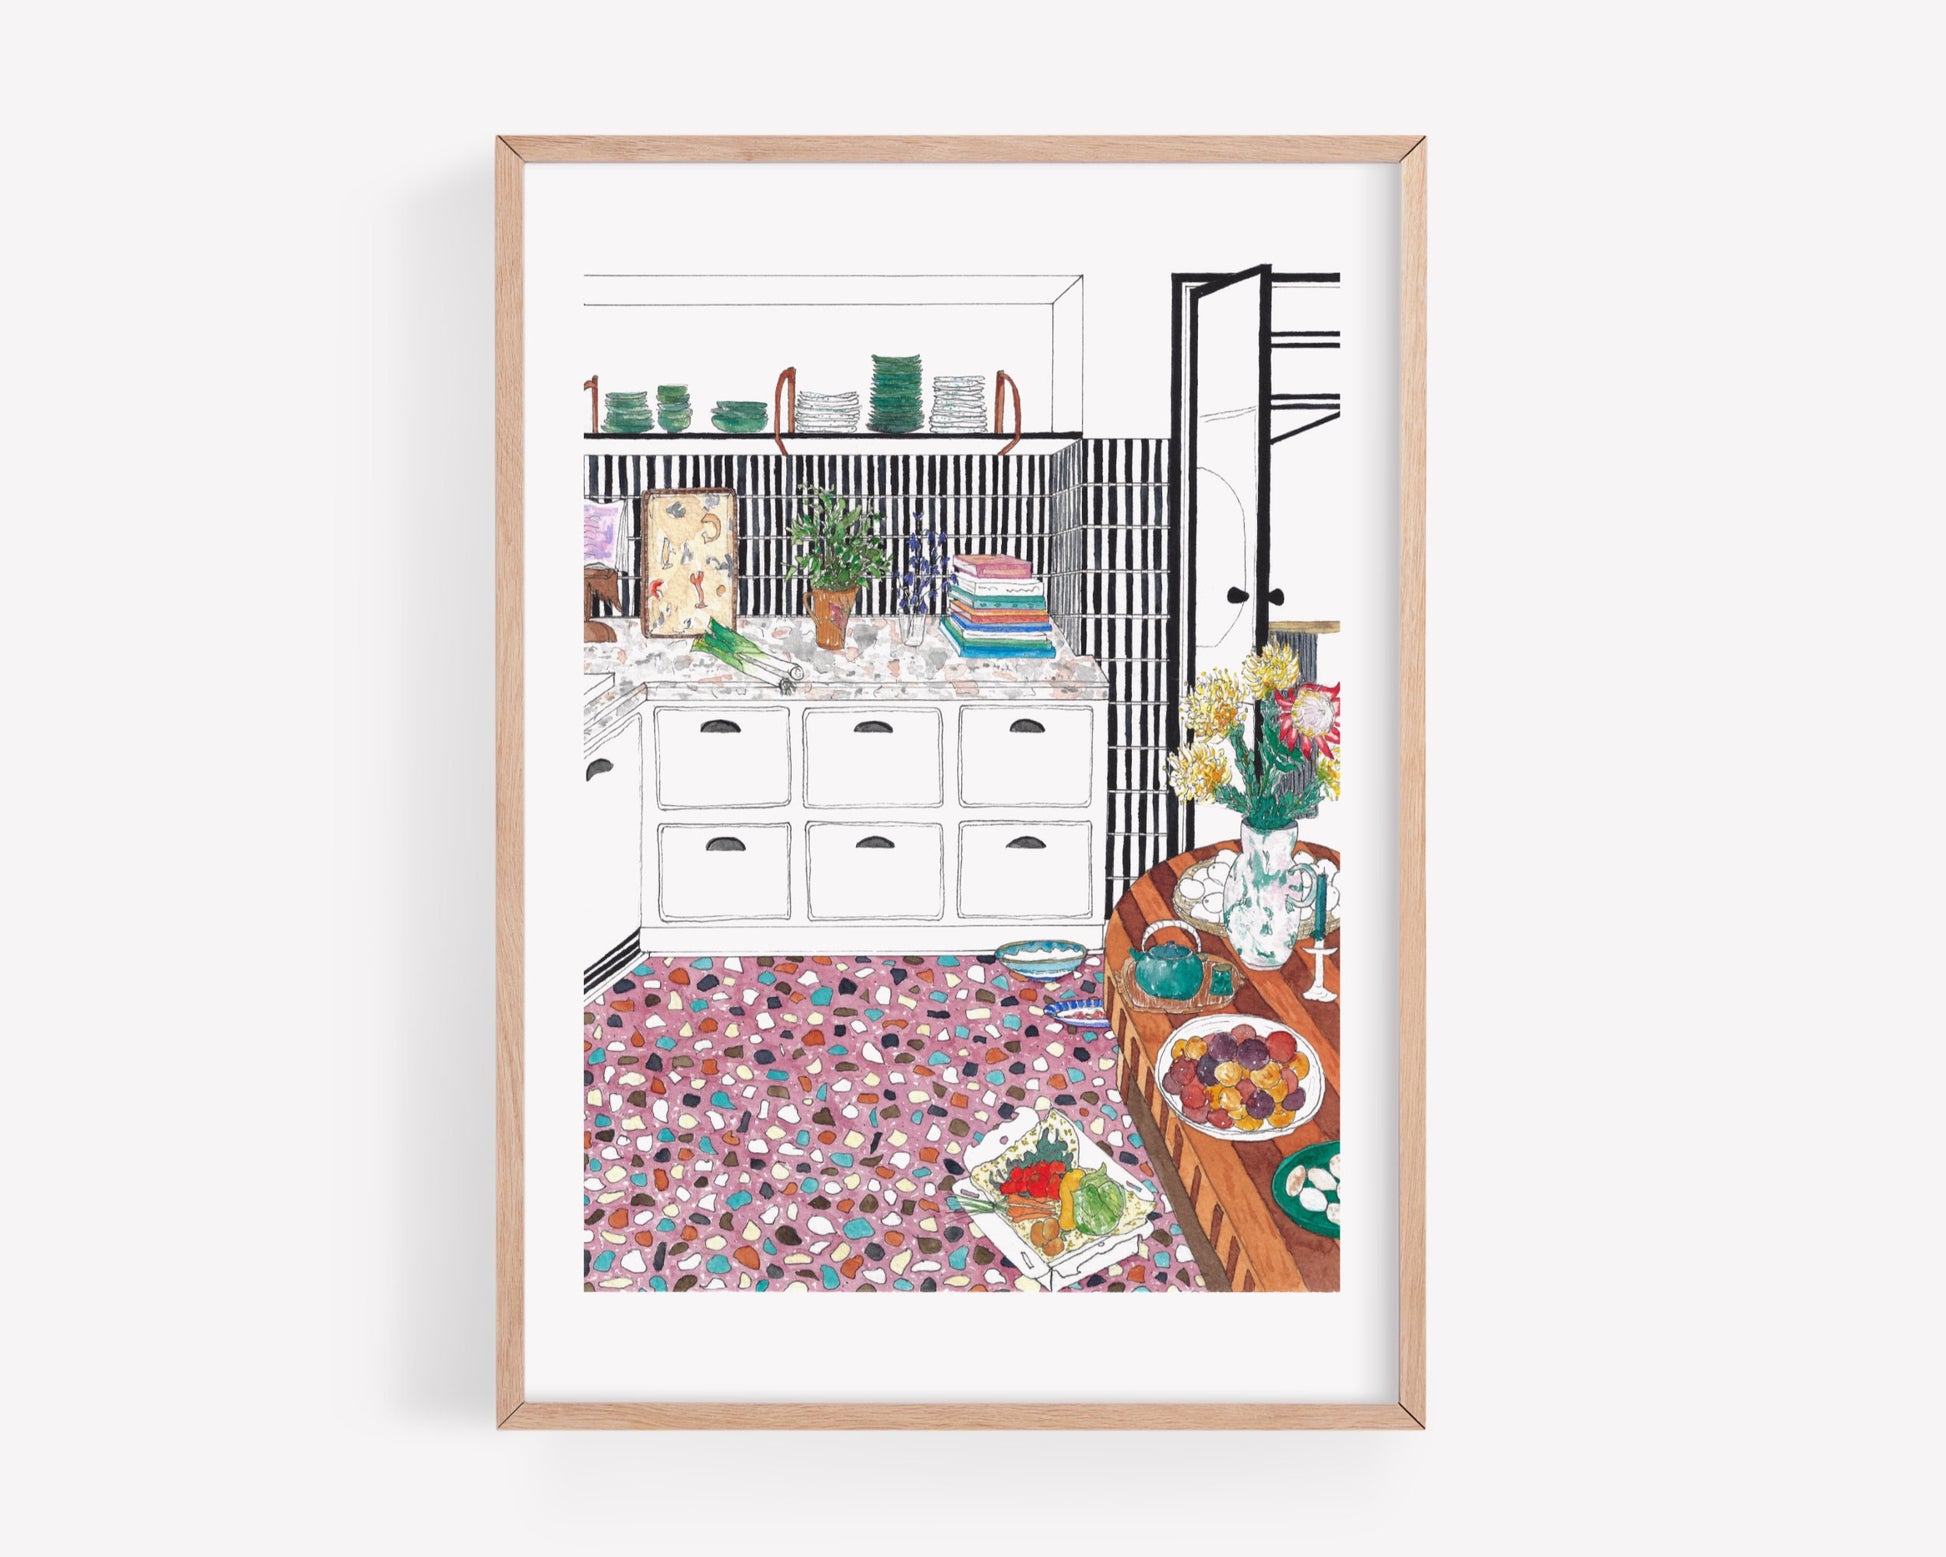 Patterned creative kitchen art print